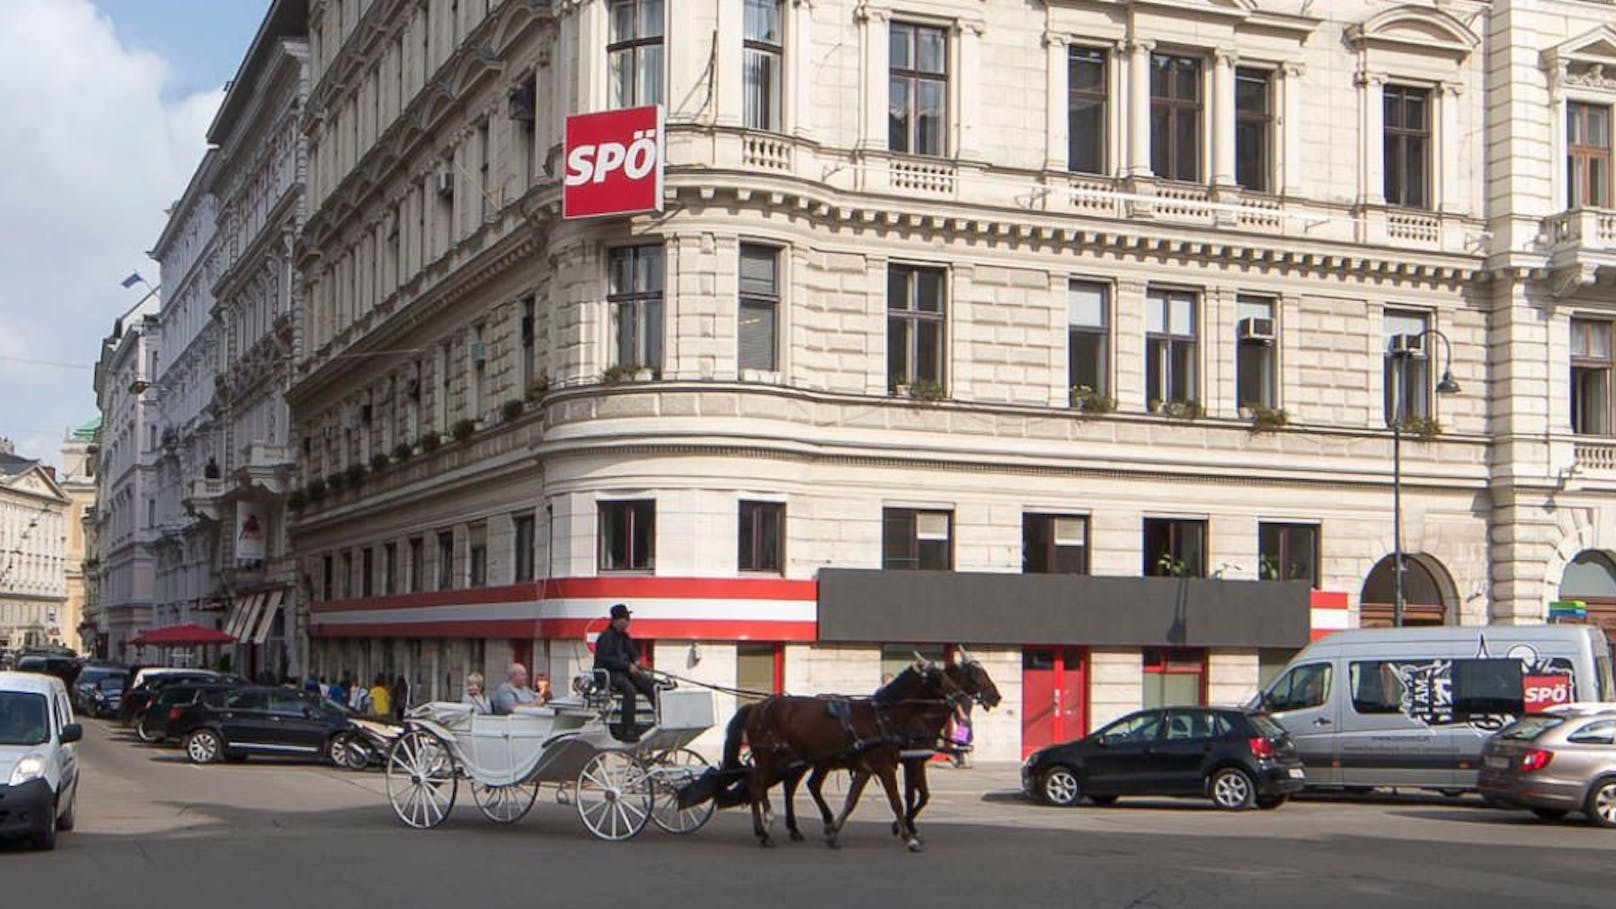 Die SPÖ-Zentrale in der Wiener Löwelstraße